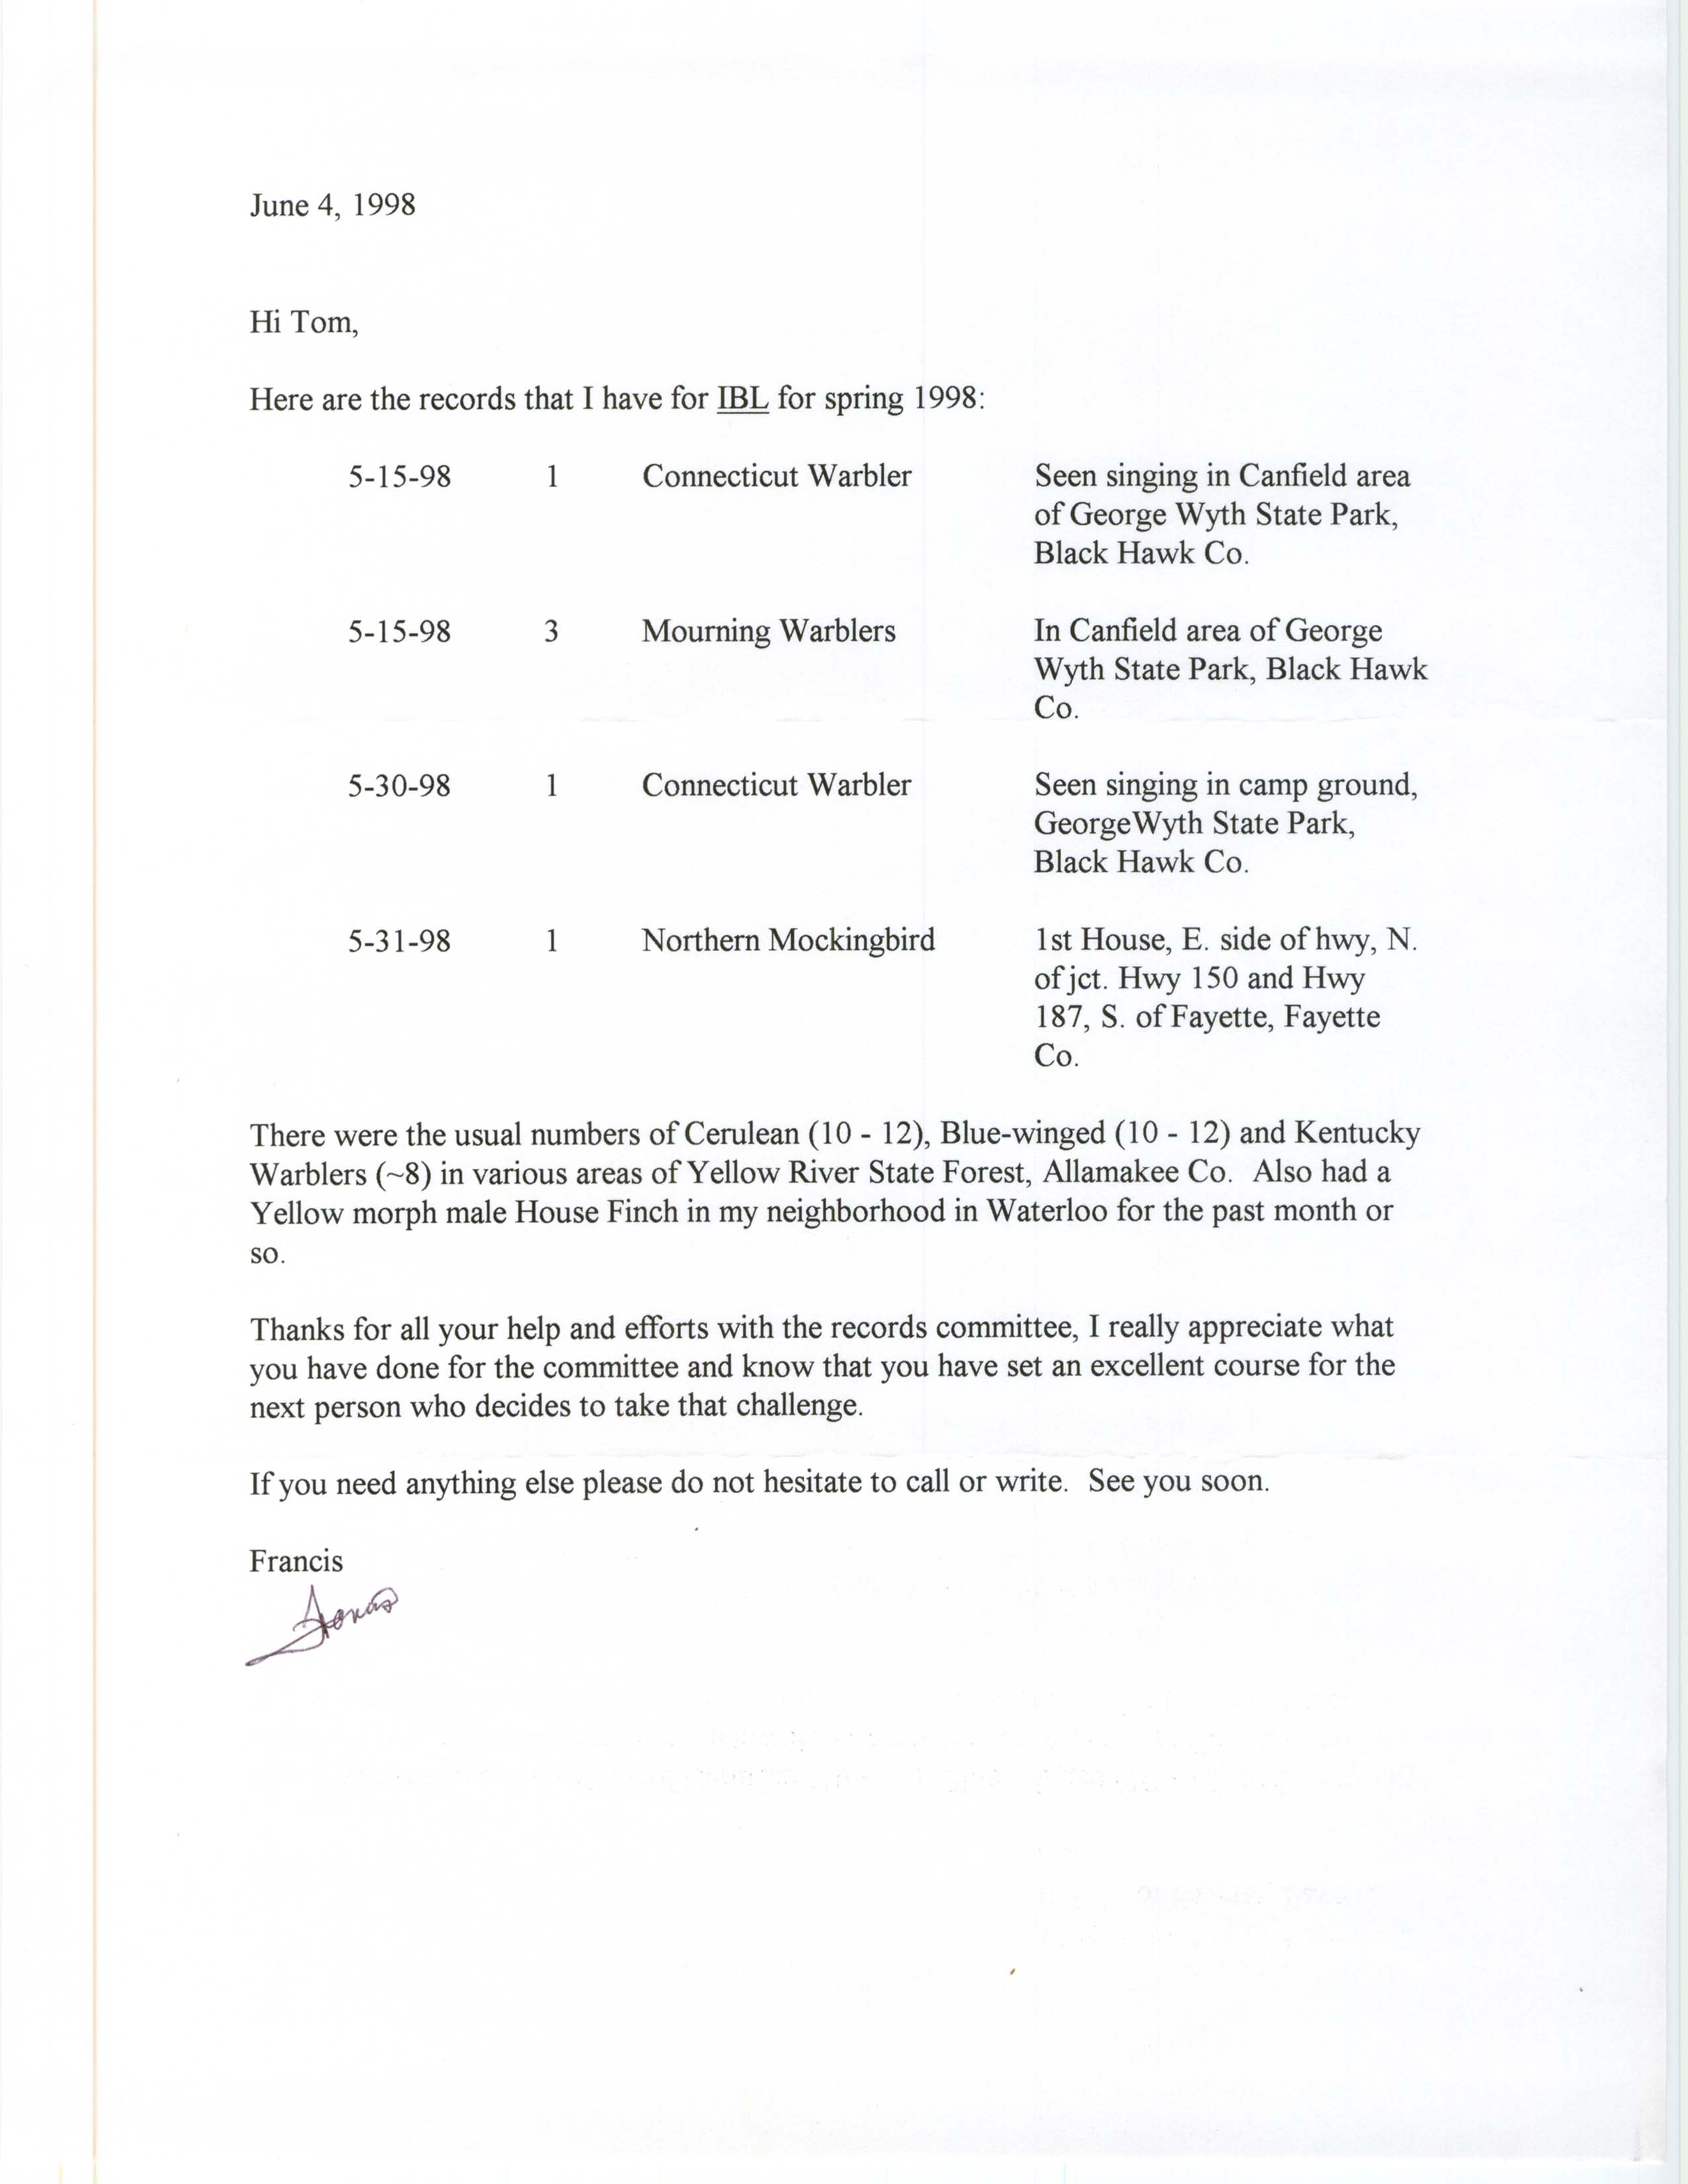 Francis Moore letter to Thomas Kent regarding spring 1998 sightings, June 4, 1998